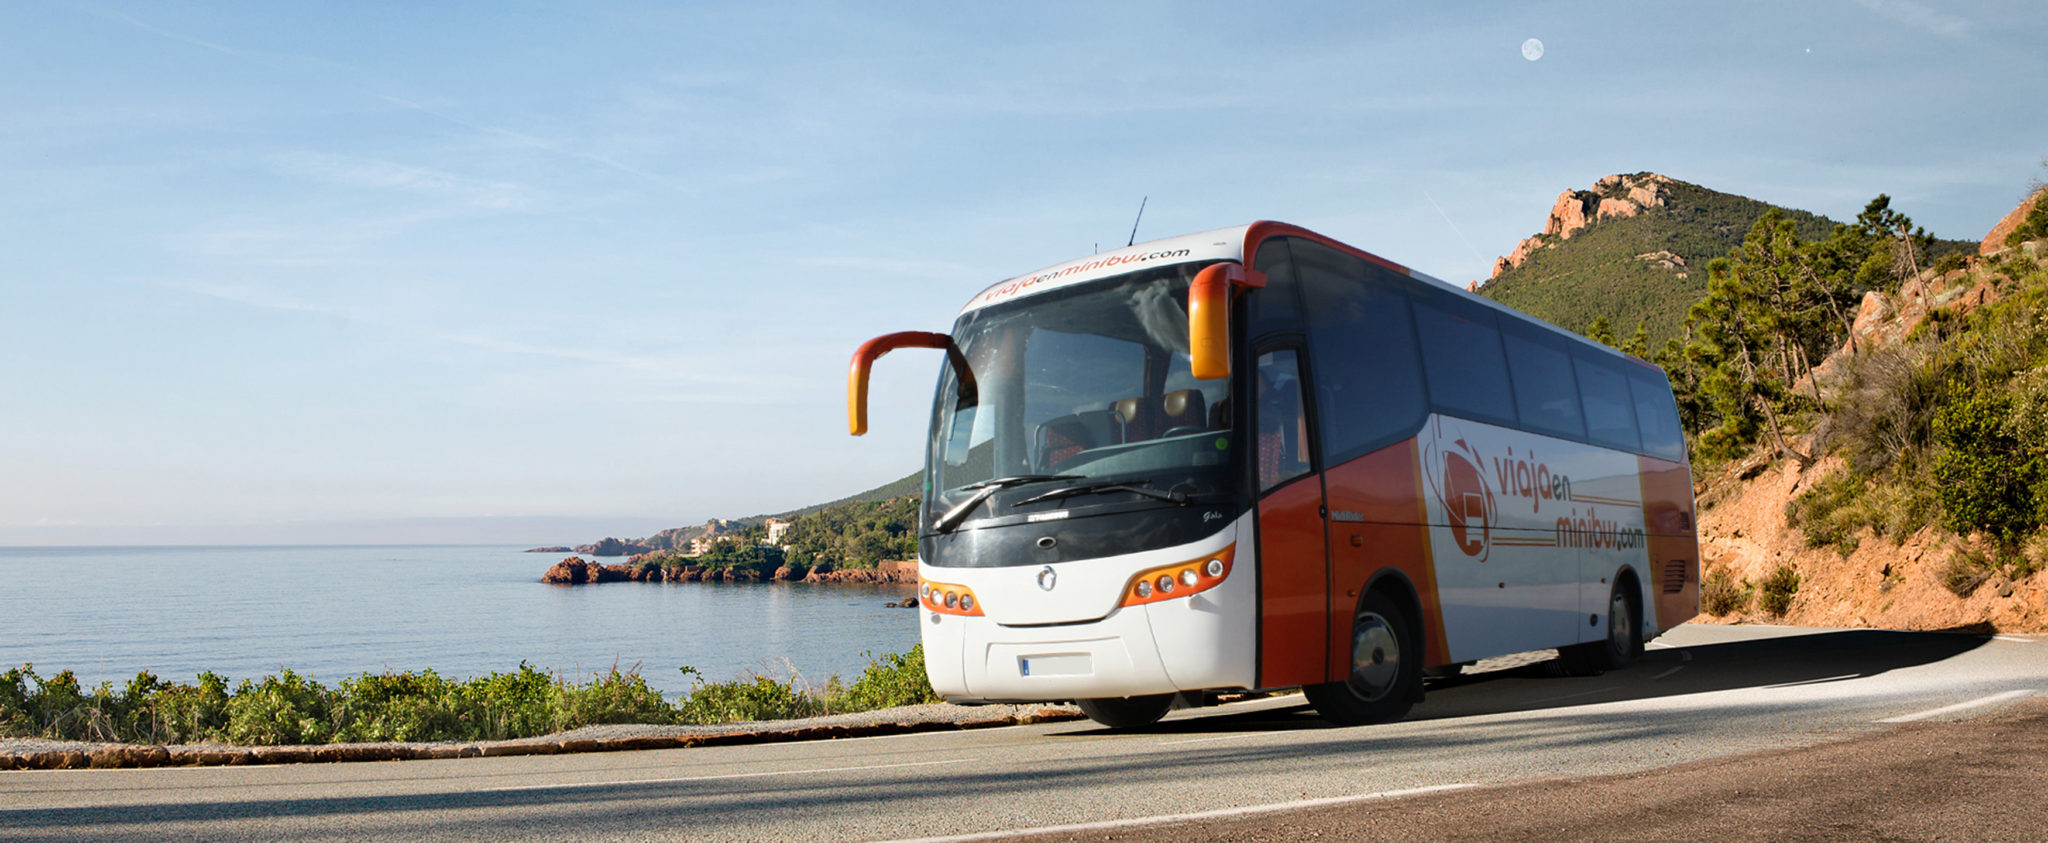 Alquiler autobús Andalucía